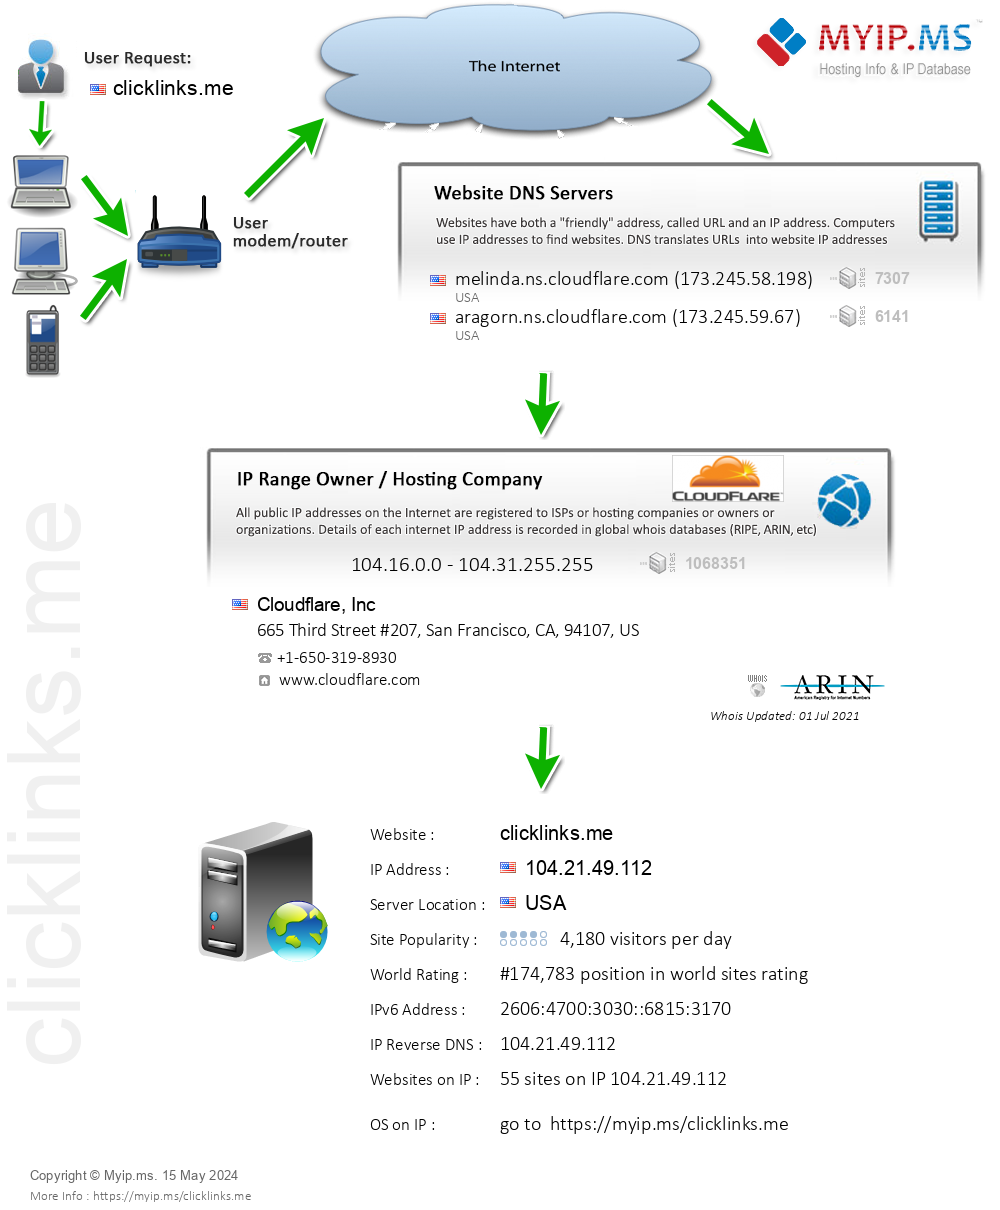 Clicklinks.me - Website Hosting Visual IP Diagram